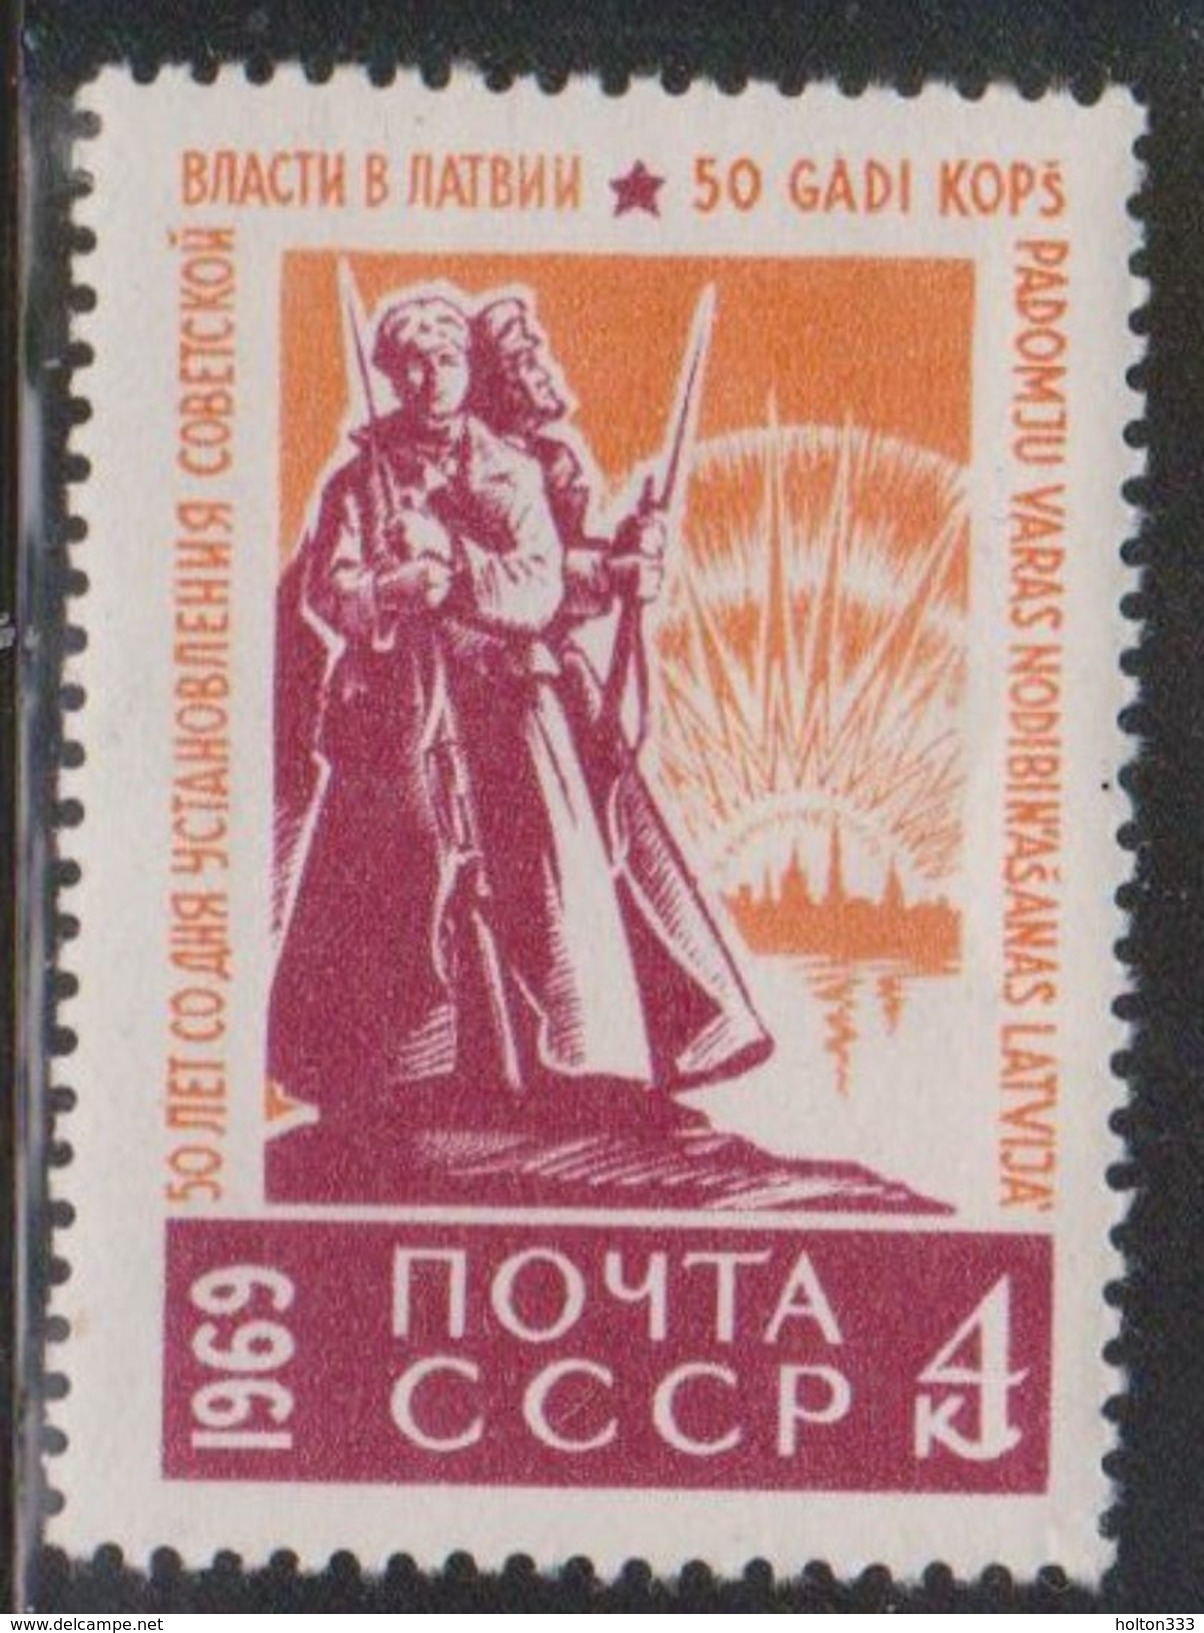 RUSSIA Scott # 3567 Mint Hinged - Latvian Soviet Republic - Eilsendung (Eilpost)